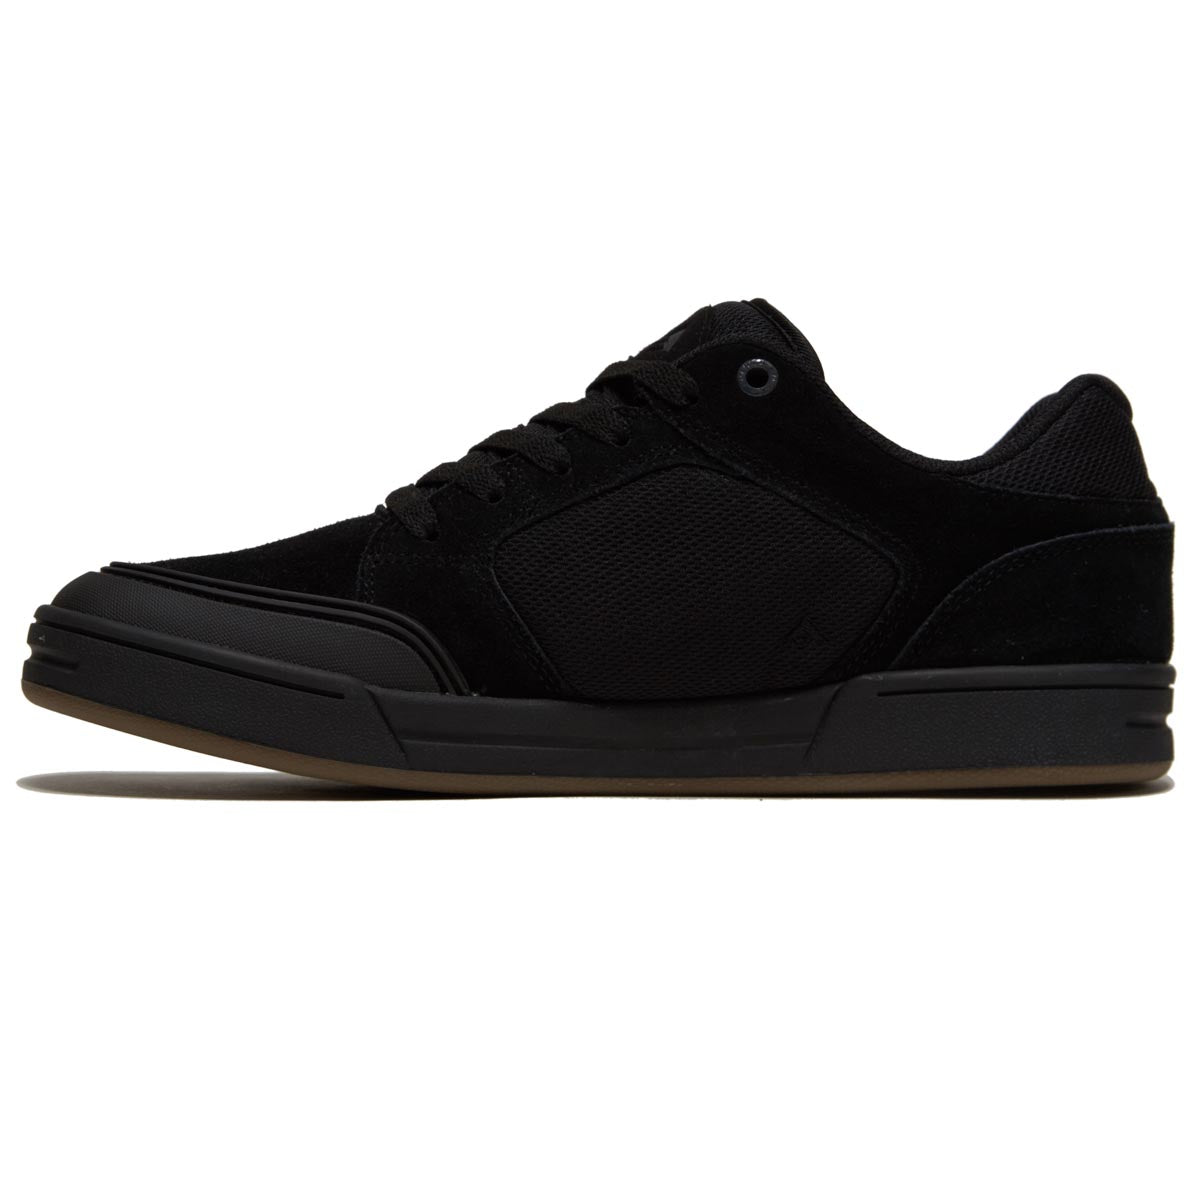 Emerica Heritic Shoes - Black/Black image 2